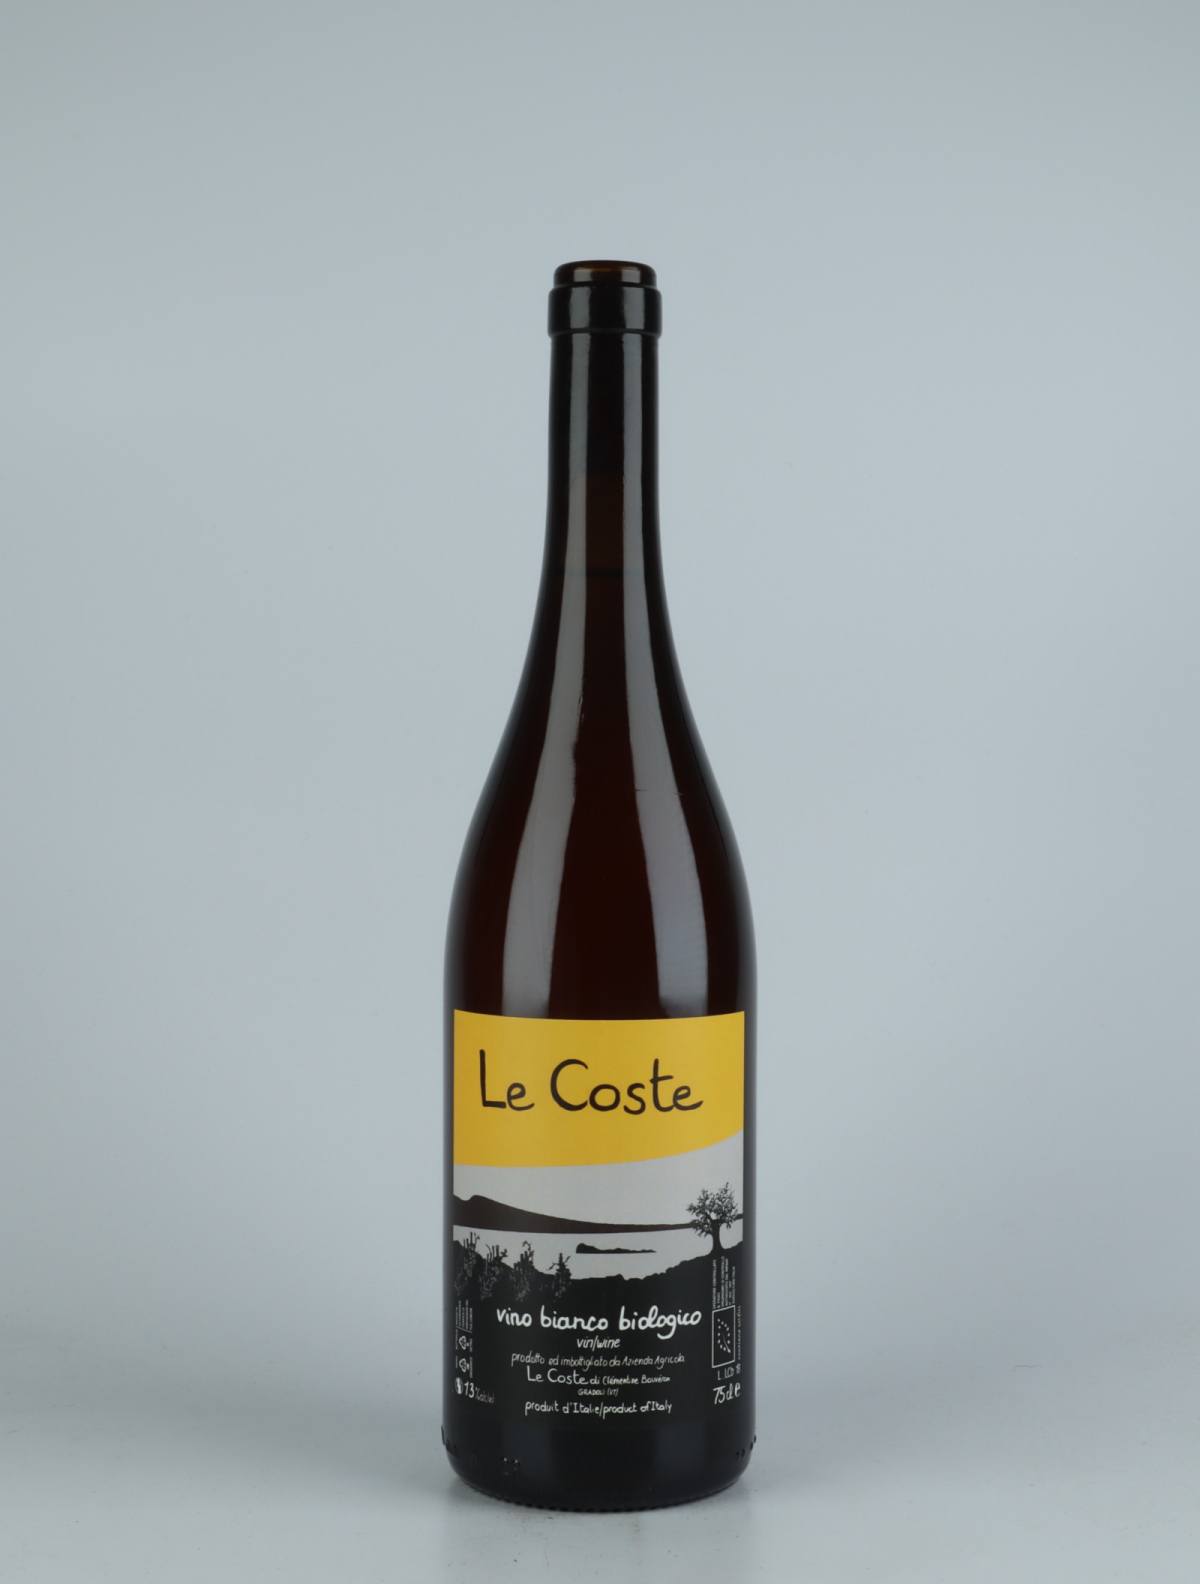 A bottle 2018 Le Coste Bianco Orange wine from Le Coste, Lazio in Italy